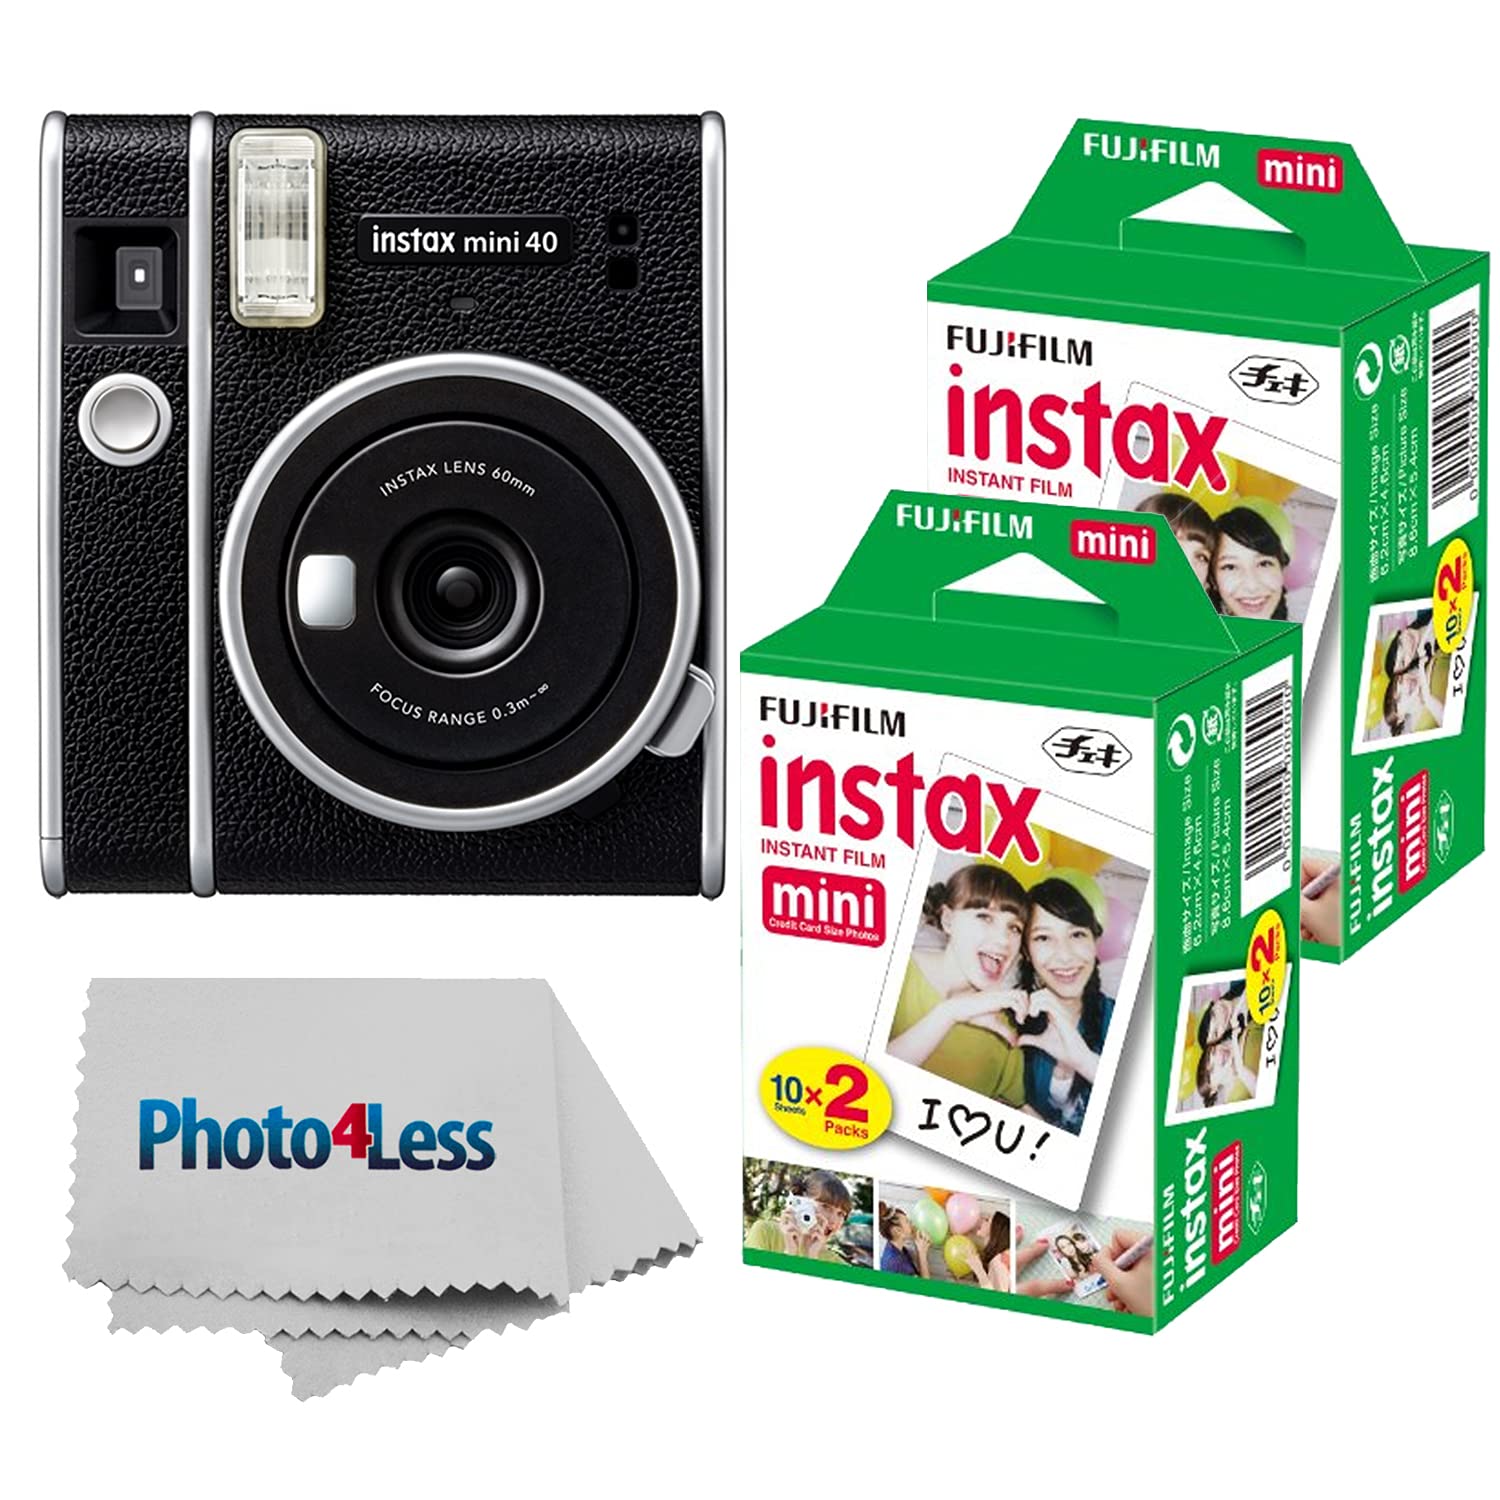  Fujifilm كاميرا فورية Instax Mini 40 باللون الأسود + عبوة Instax Mini Twin Pack فيلم فوري (إجمالي 40 ورقة) - حزمة قيمة رائعة للكاميرا...